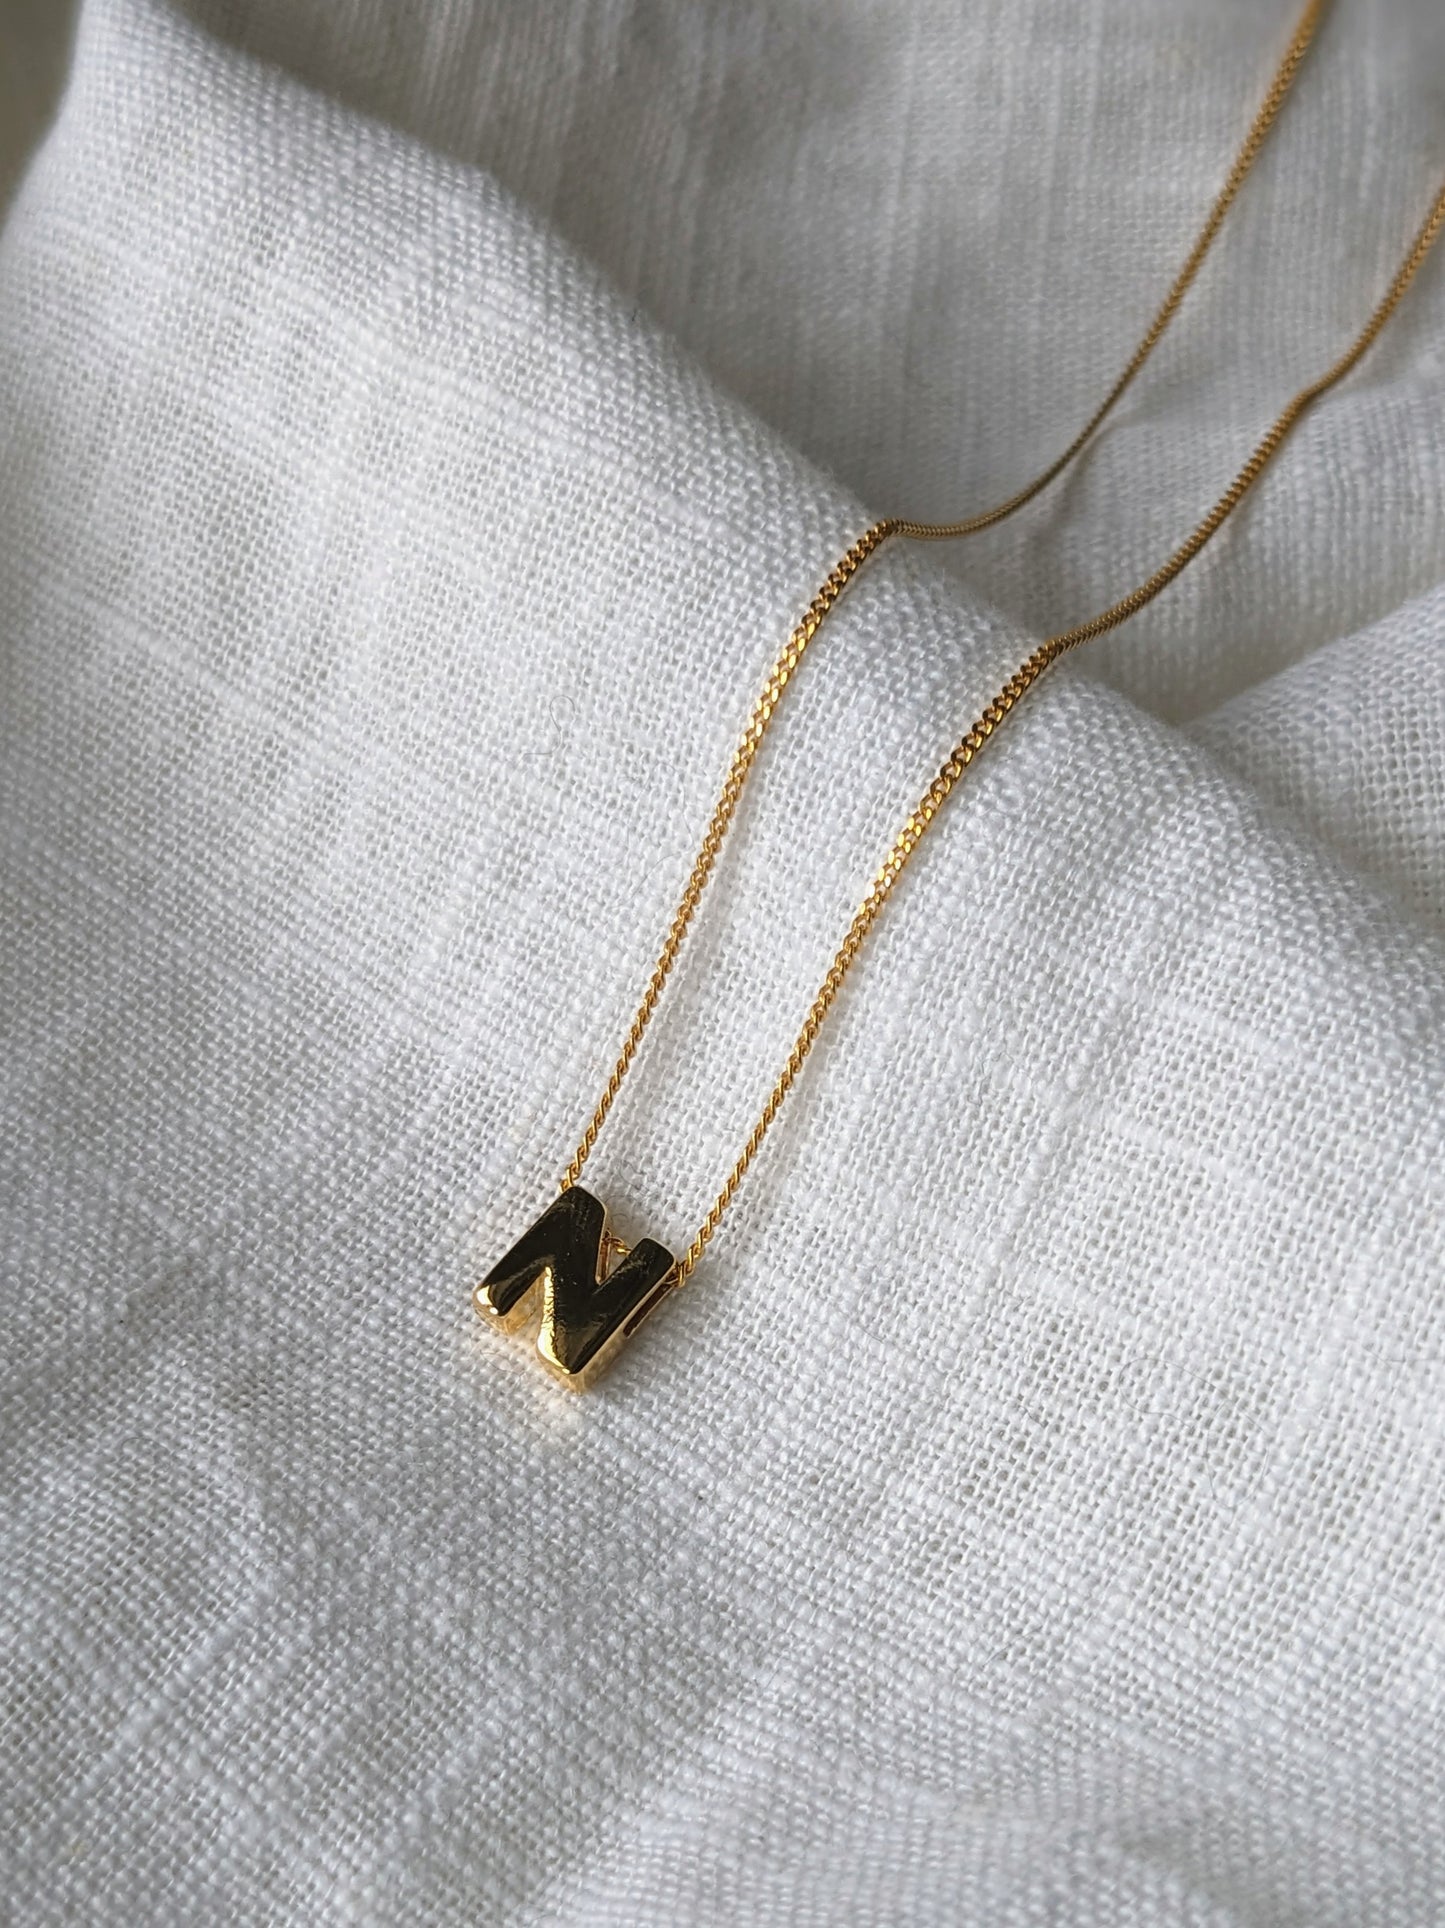 Inital Necklace - 18 Carat Gold Vermeil